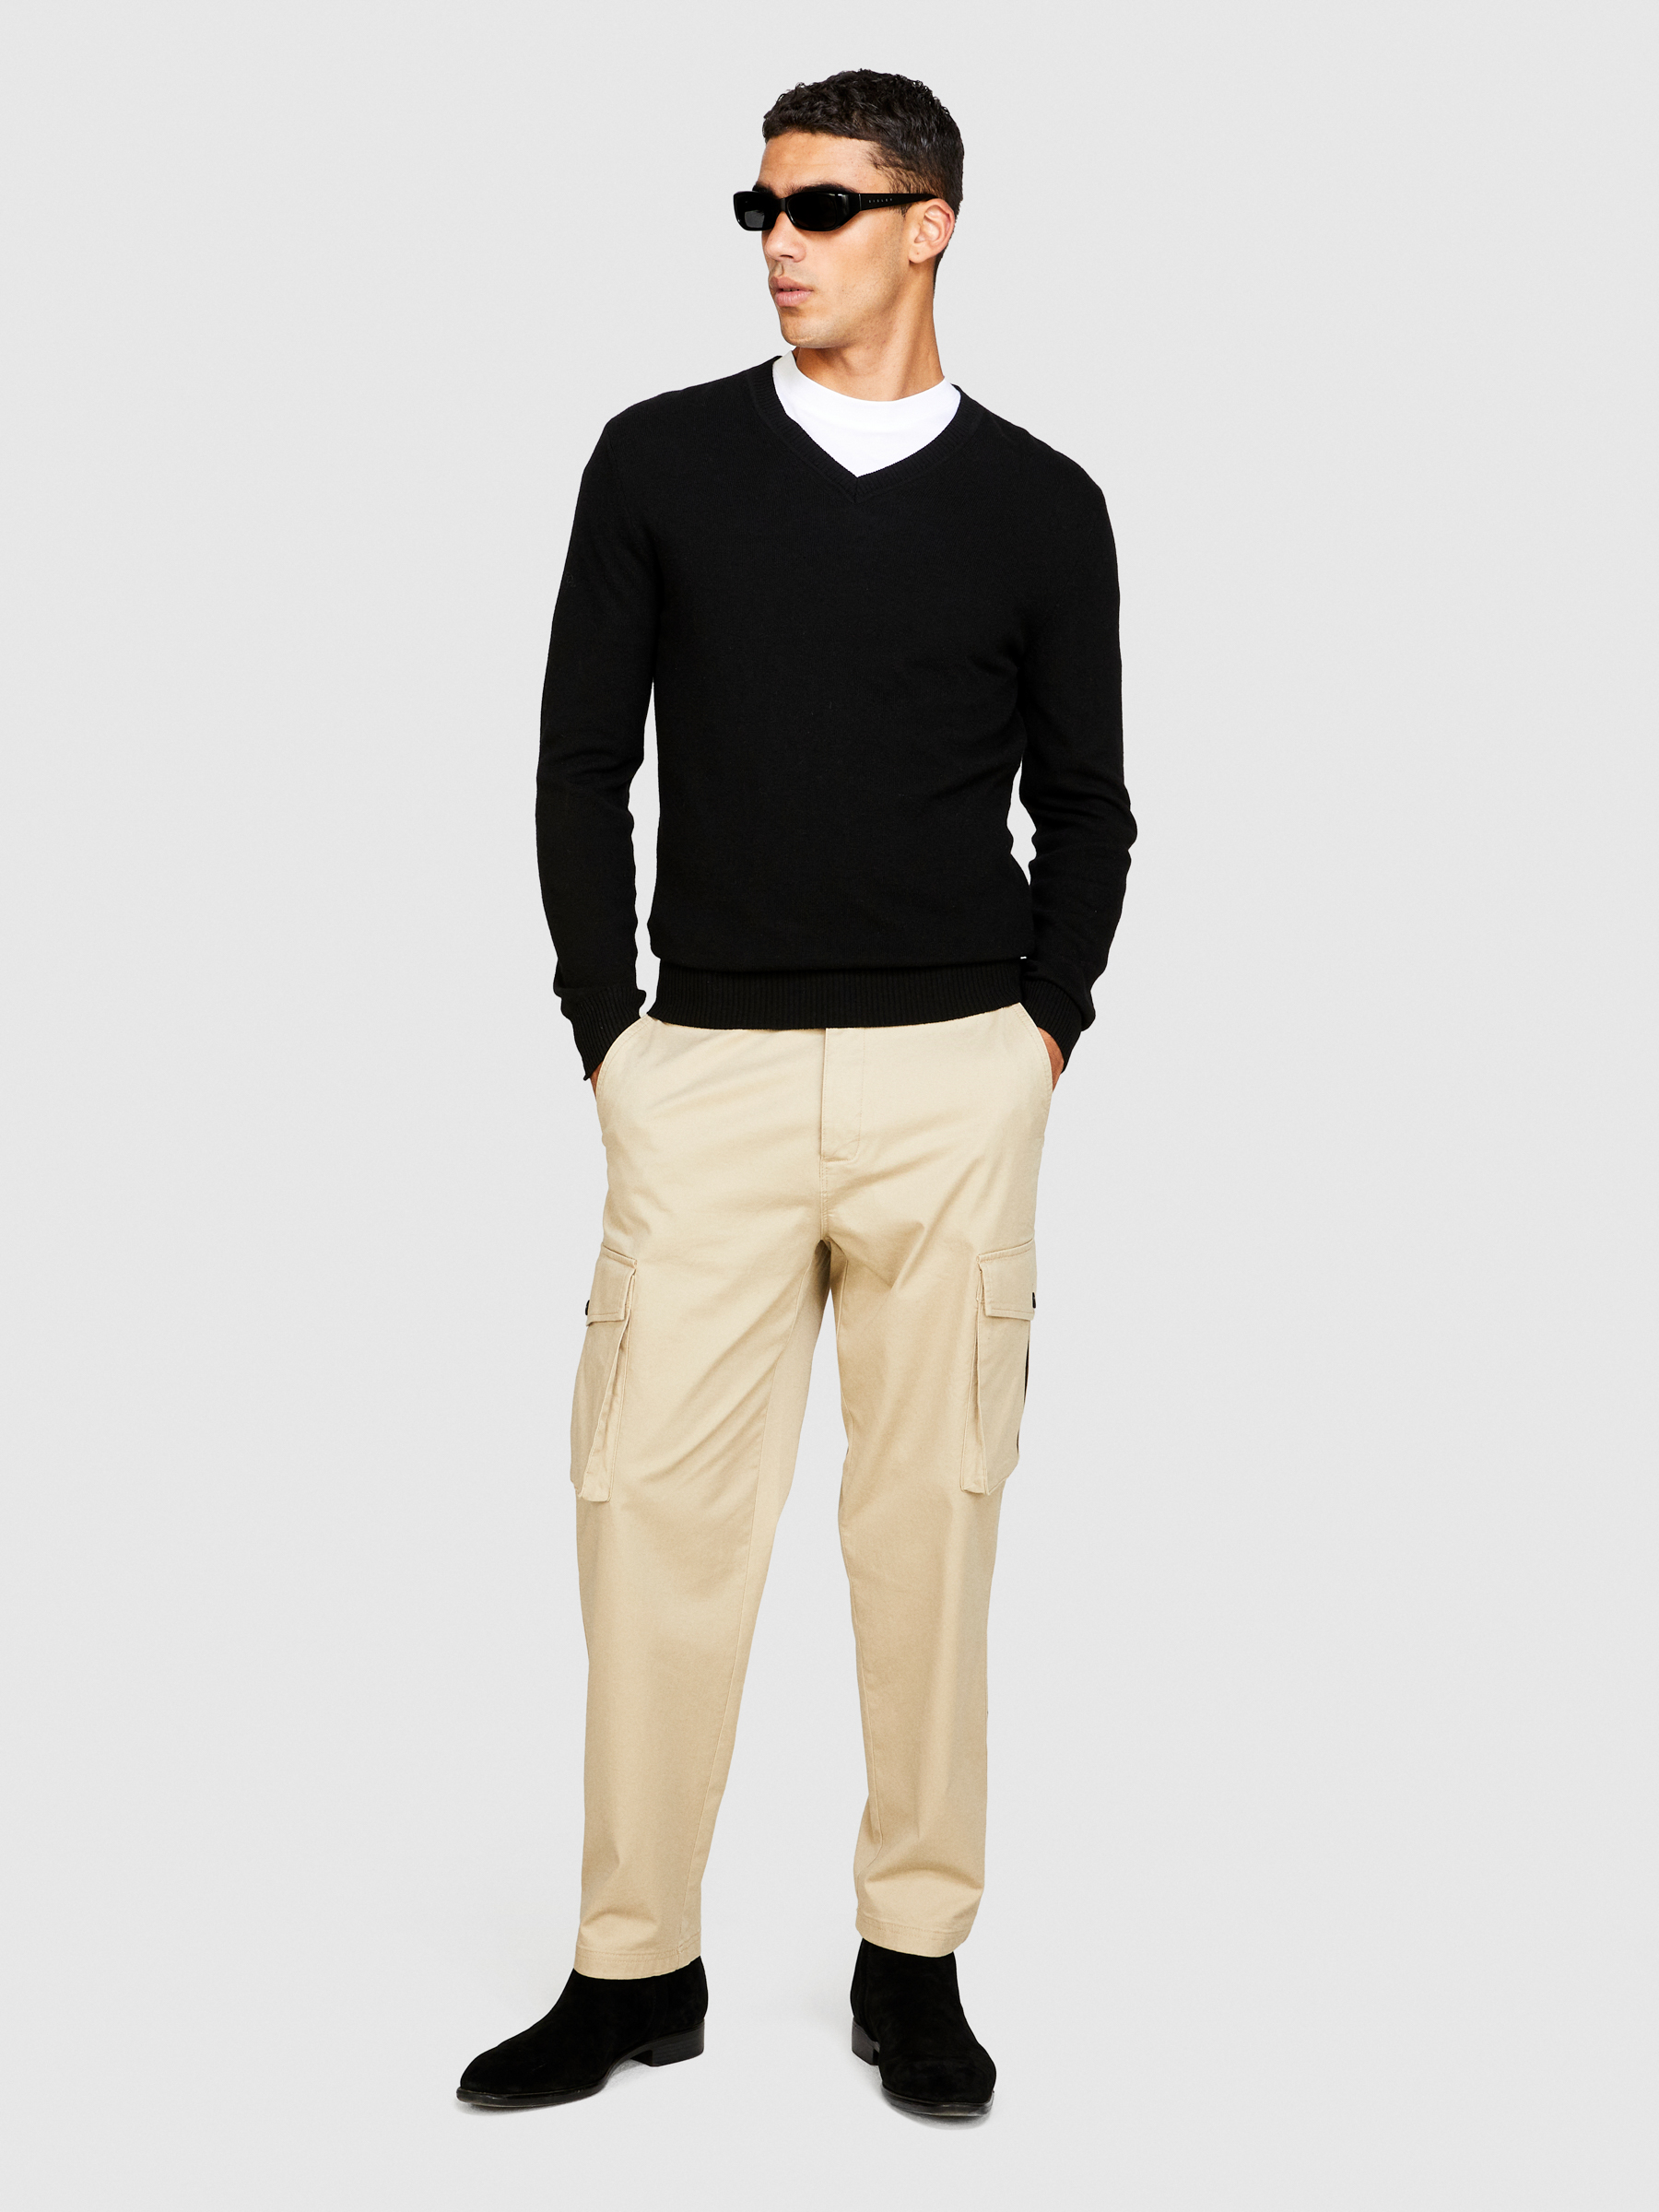 Sisley - V-neck Sweater, Man, Black, Size: L